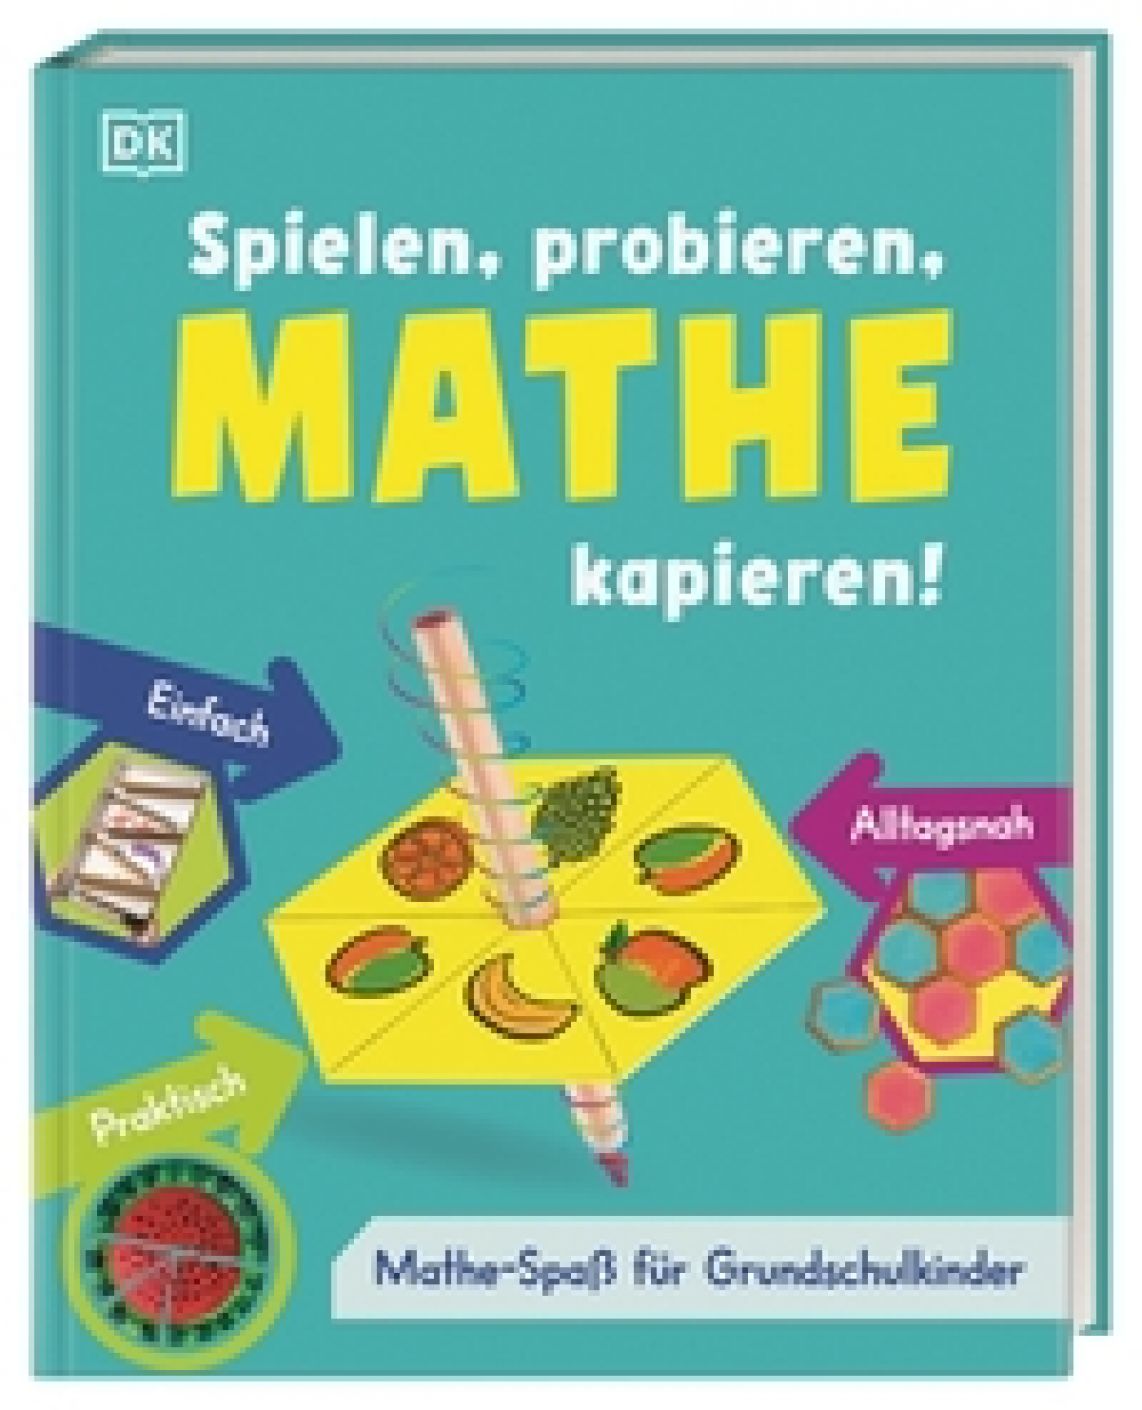 Imafidon, Anne-Marie "Spielen, probieren Mathe kapieren!"